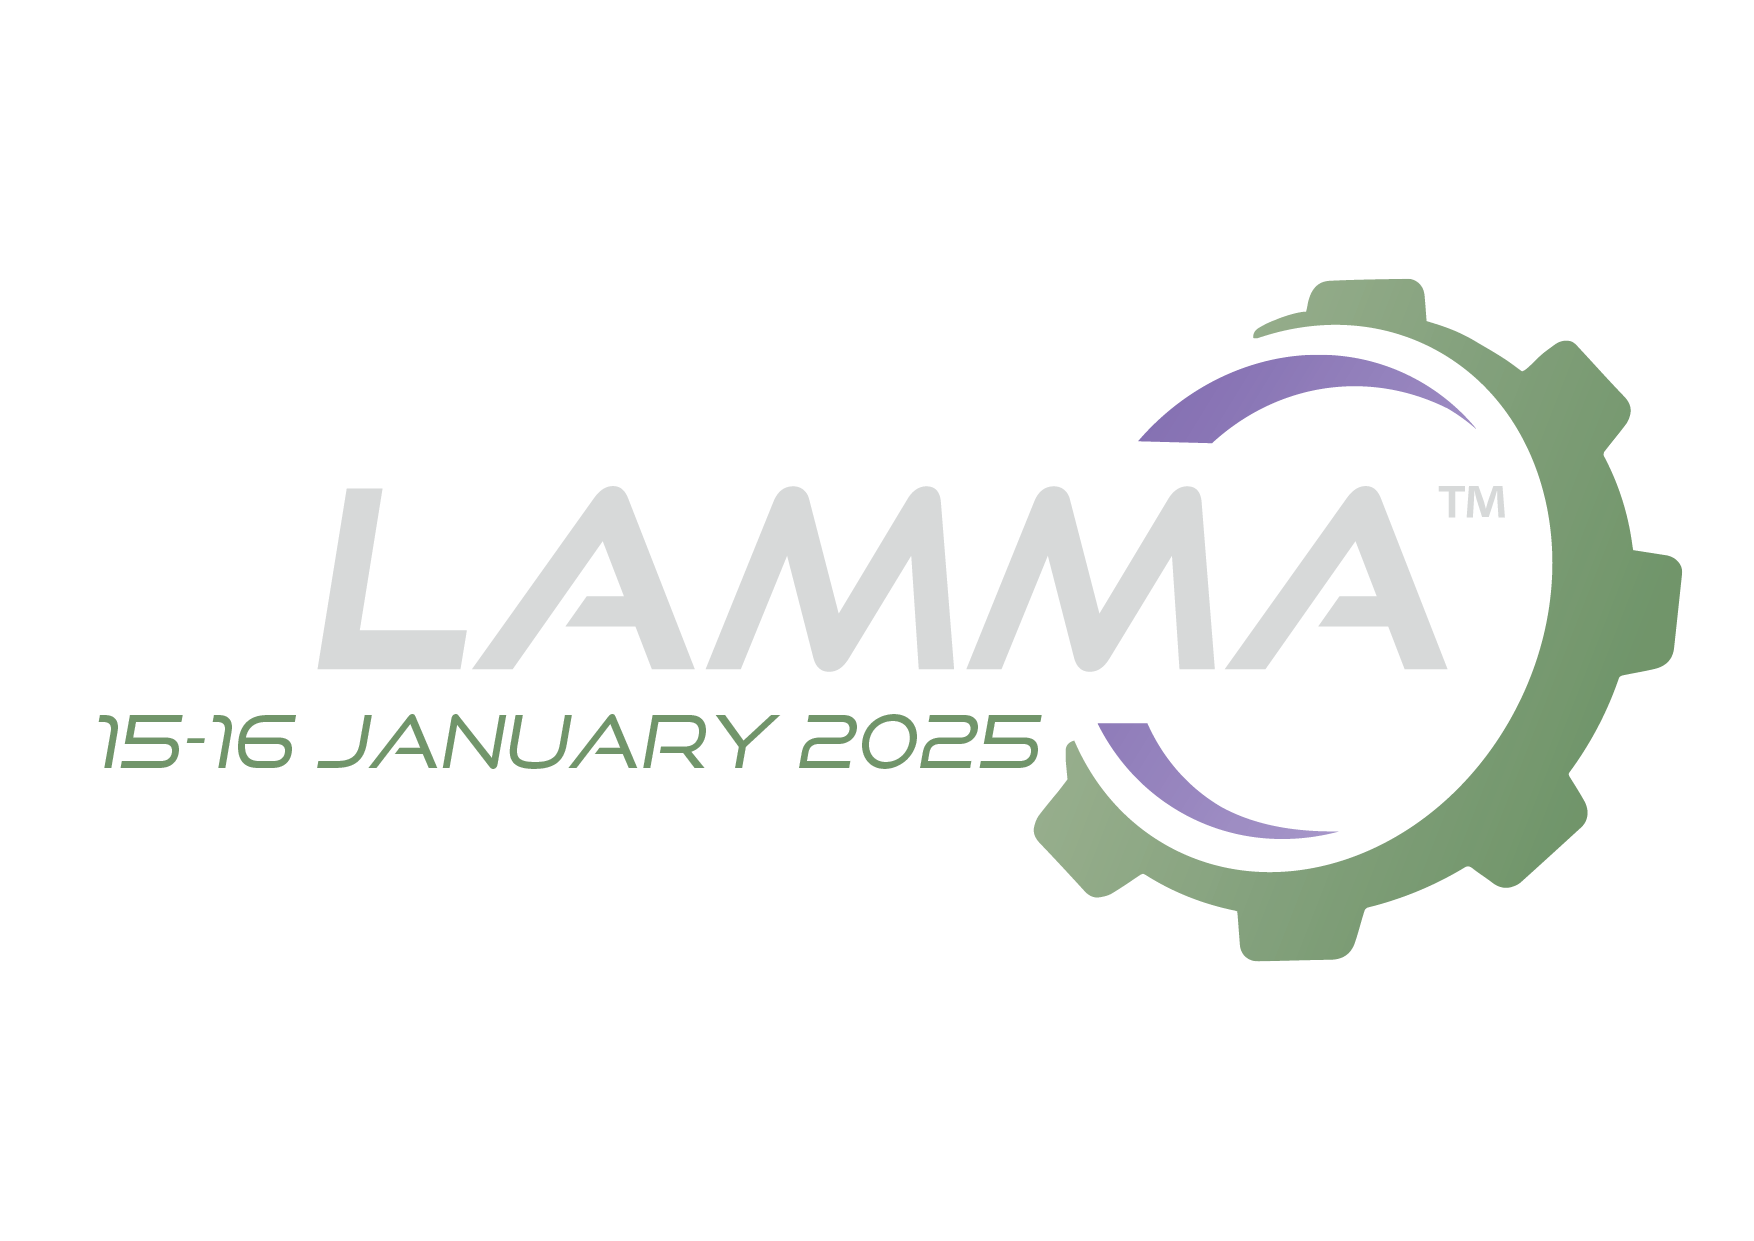 LAMMA 2025 logo